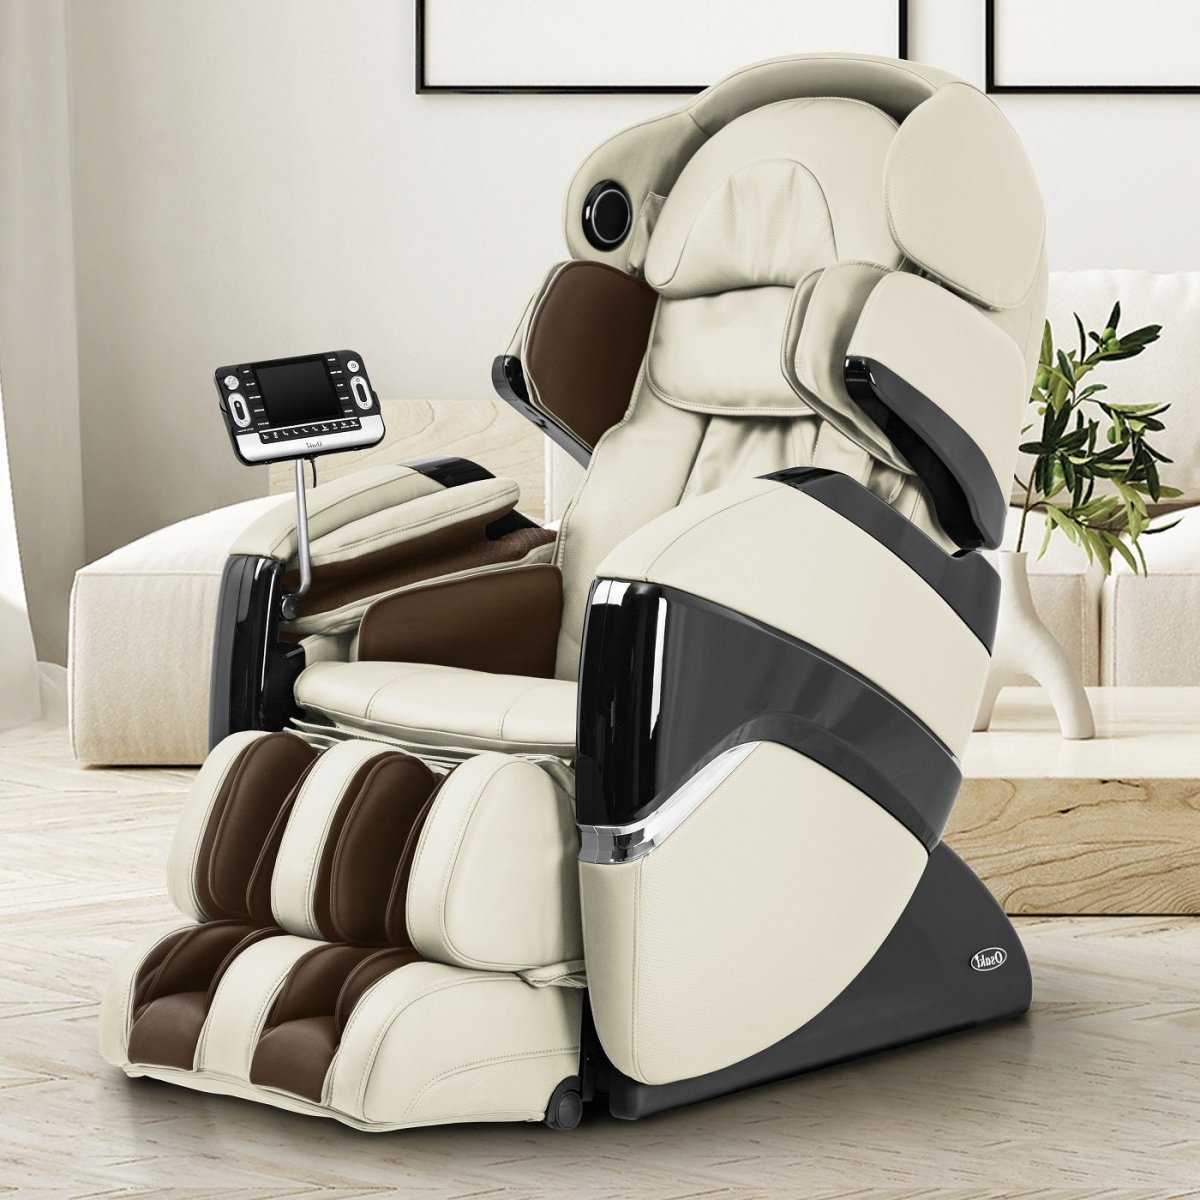 Osaki OS-Pro 3D Cyber | Titan Chair